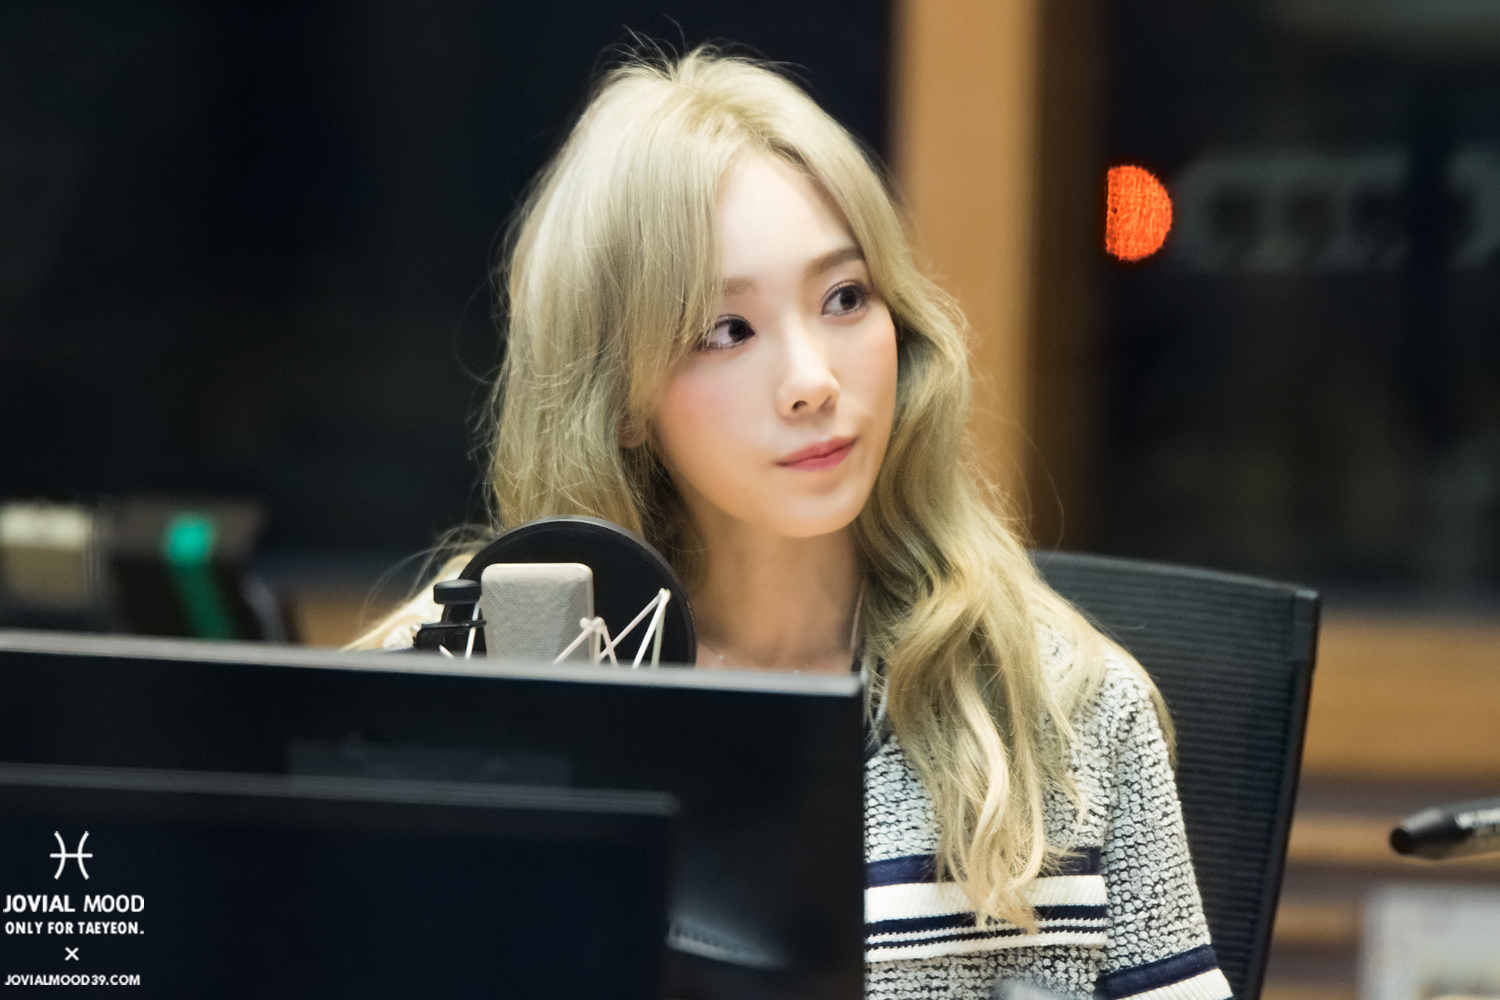 [OTHER][06-02-2015]Hình ảnh mới nhất từ DJ Sunny tại Radio MBC FM4U - "FM Date" - Page 32 28643328014_cd776ccb68_o